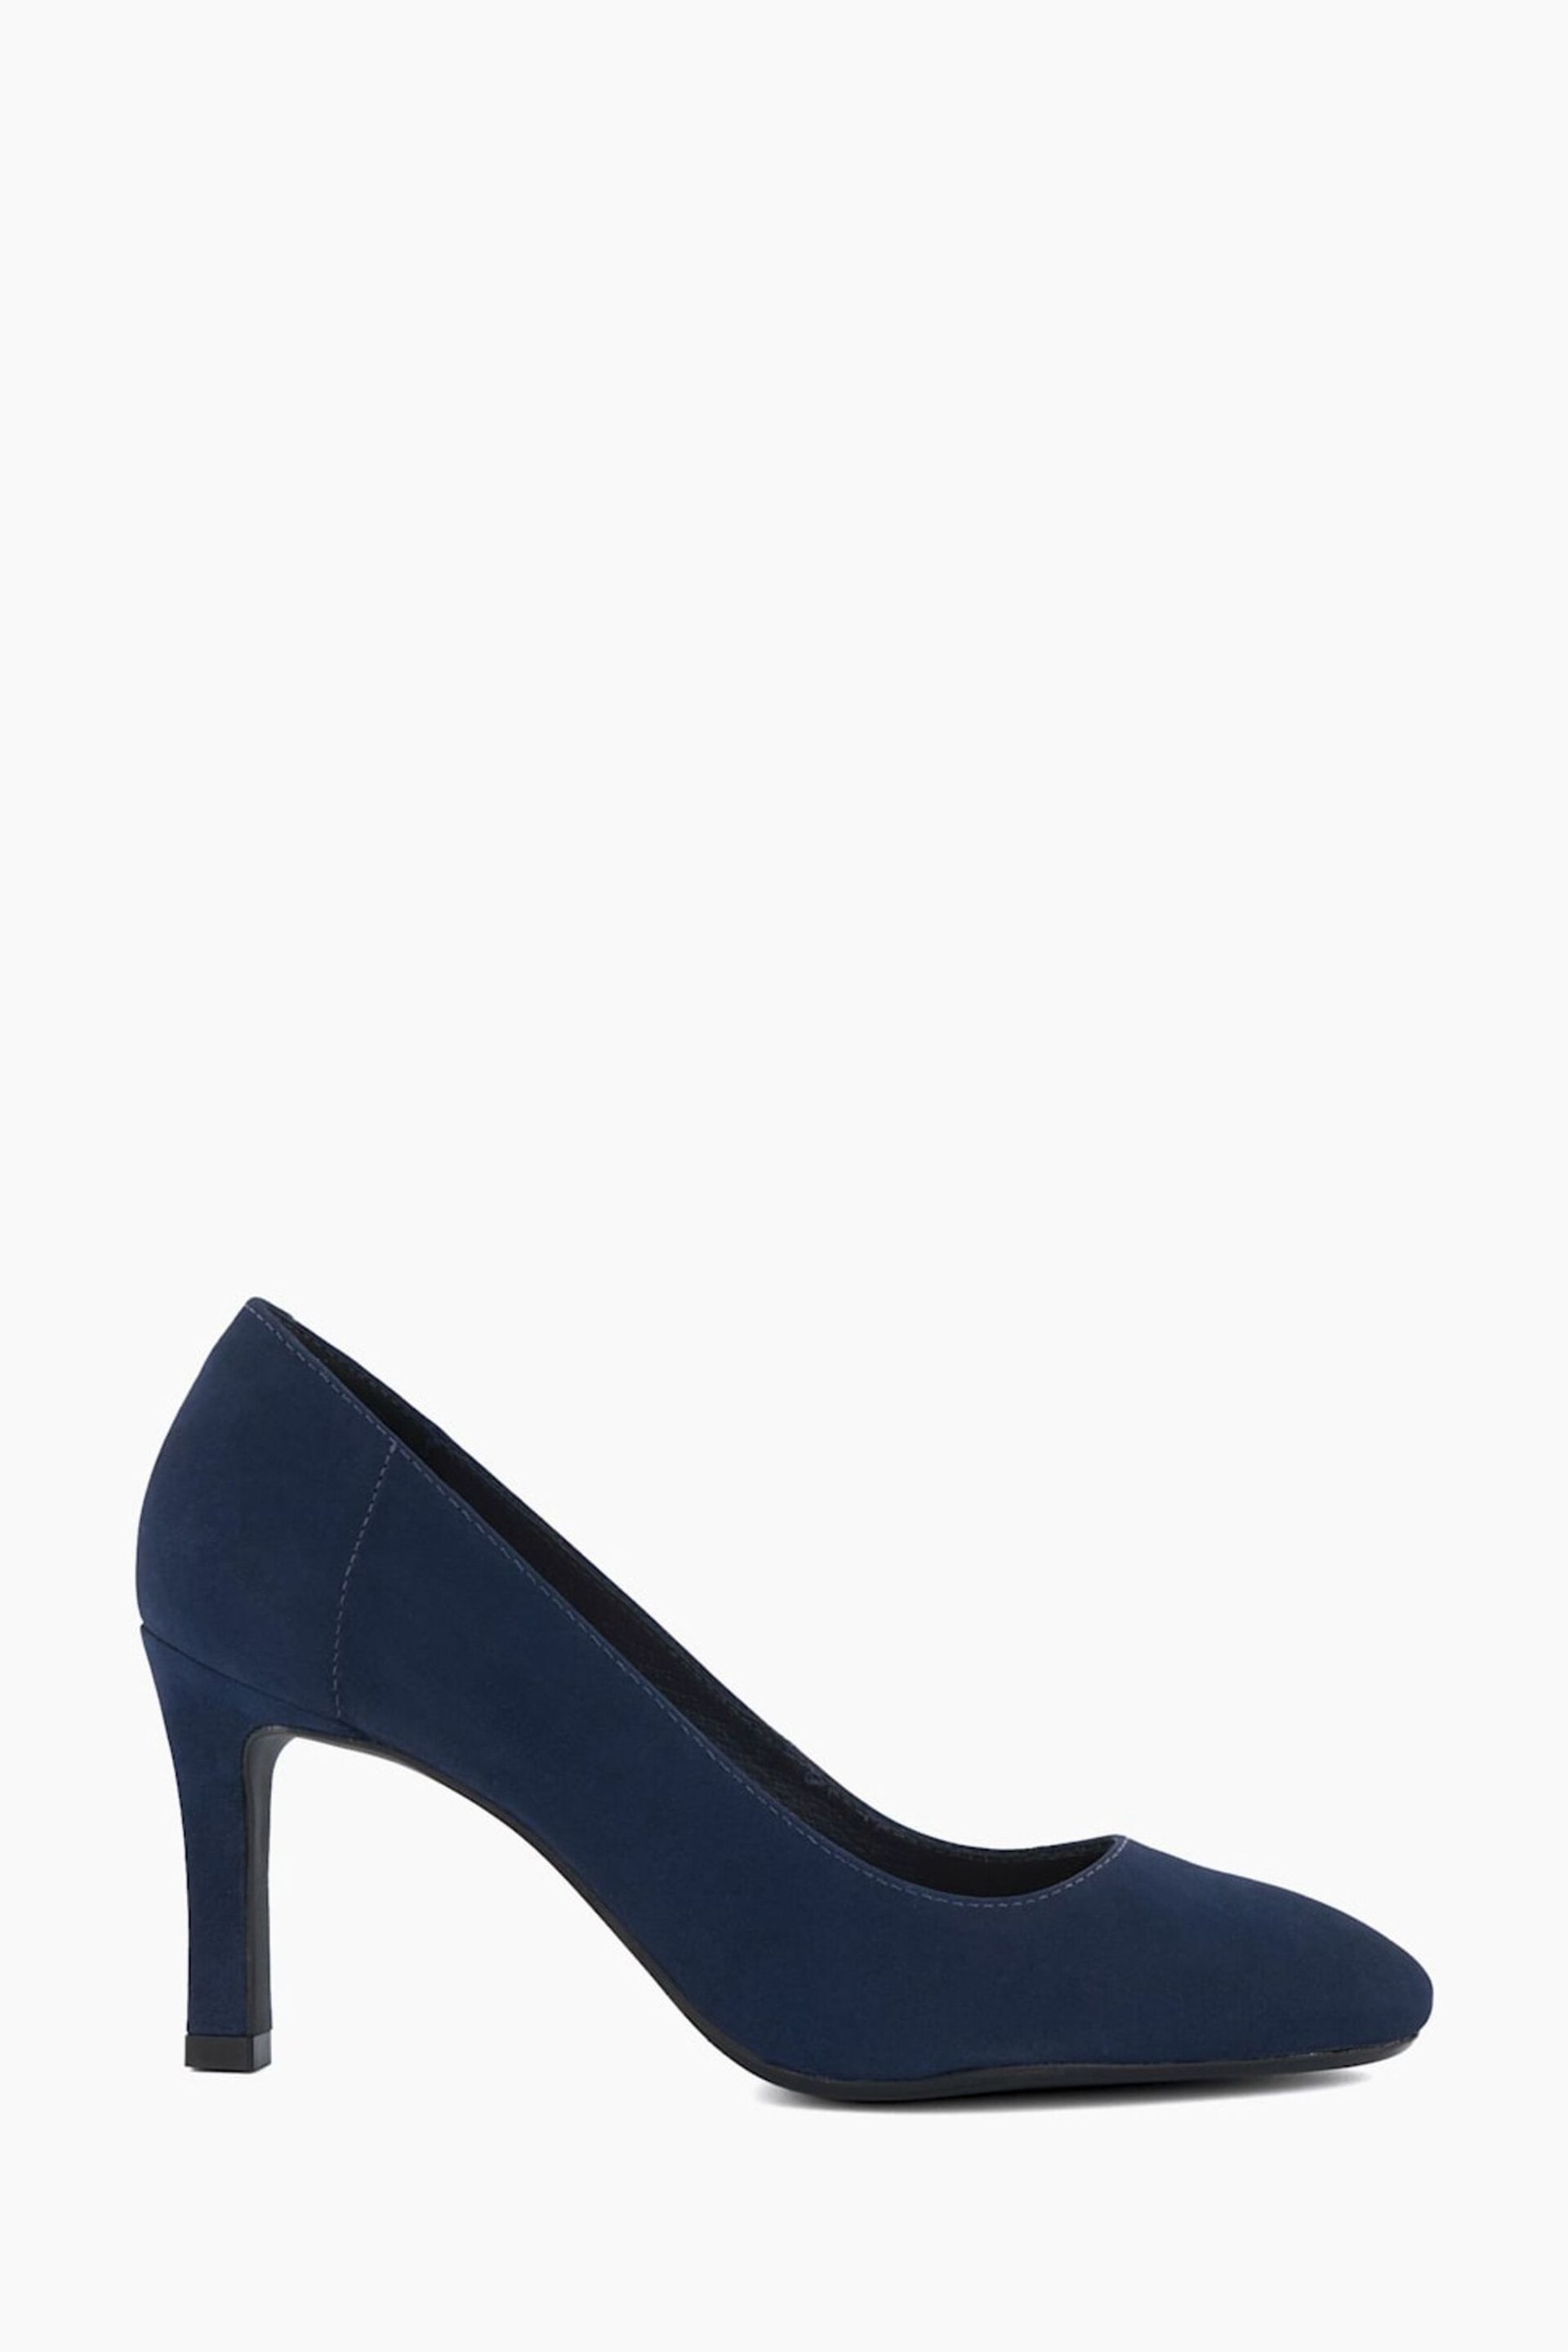 Dune London Blue Adele New Comfort Shoes - Image 1 of 6